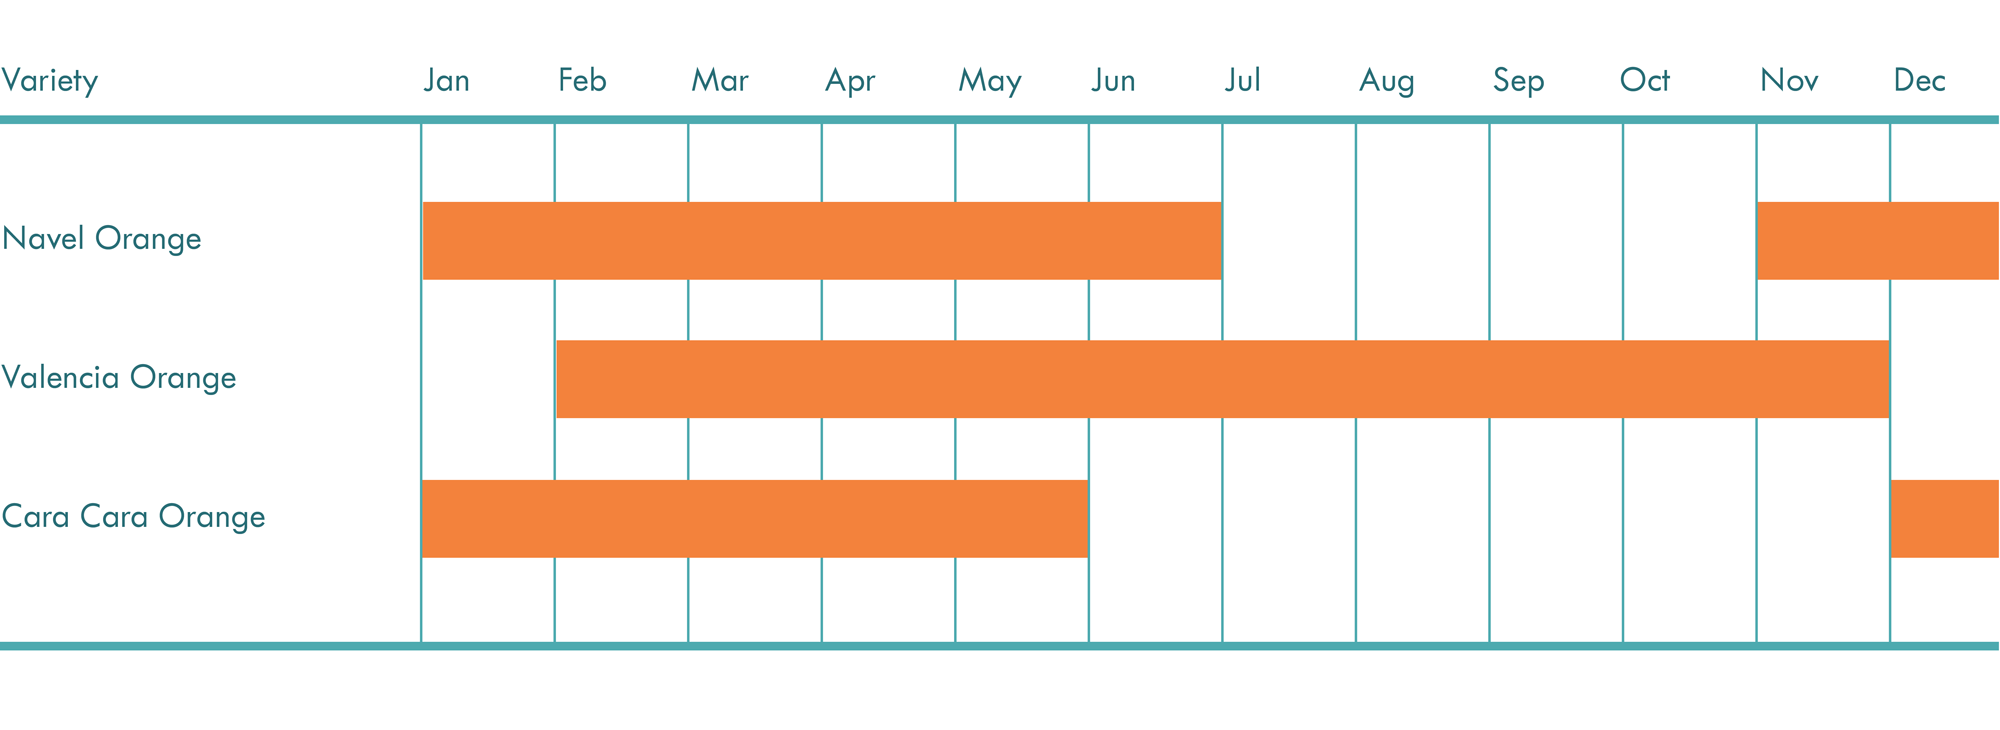 Seasonality Chart, graph of citrus availability per month